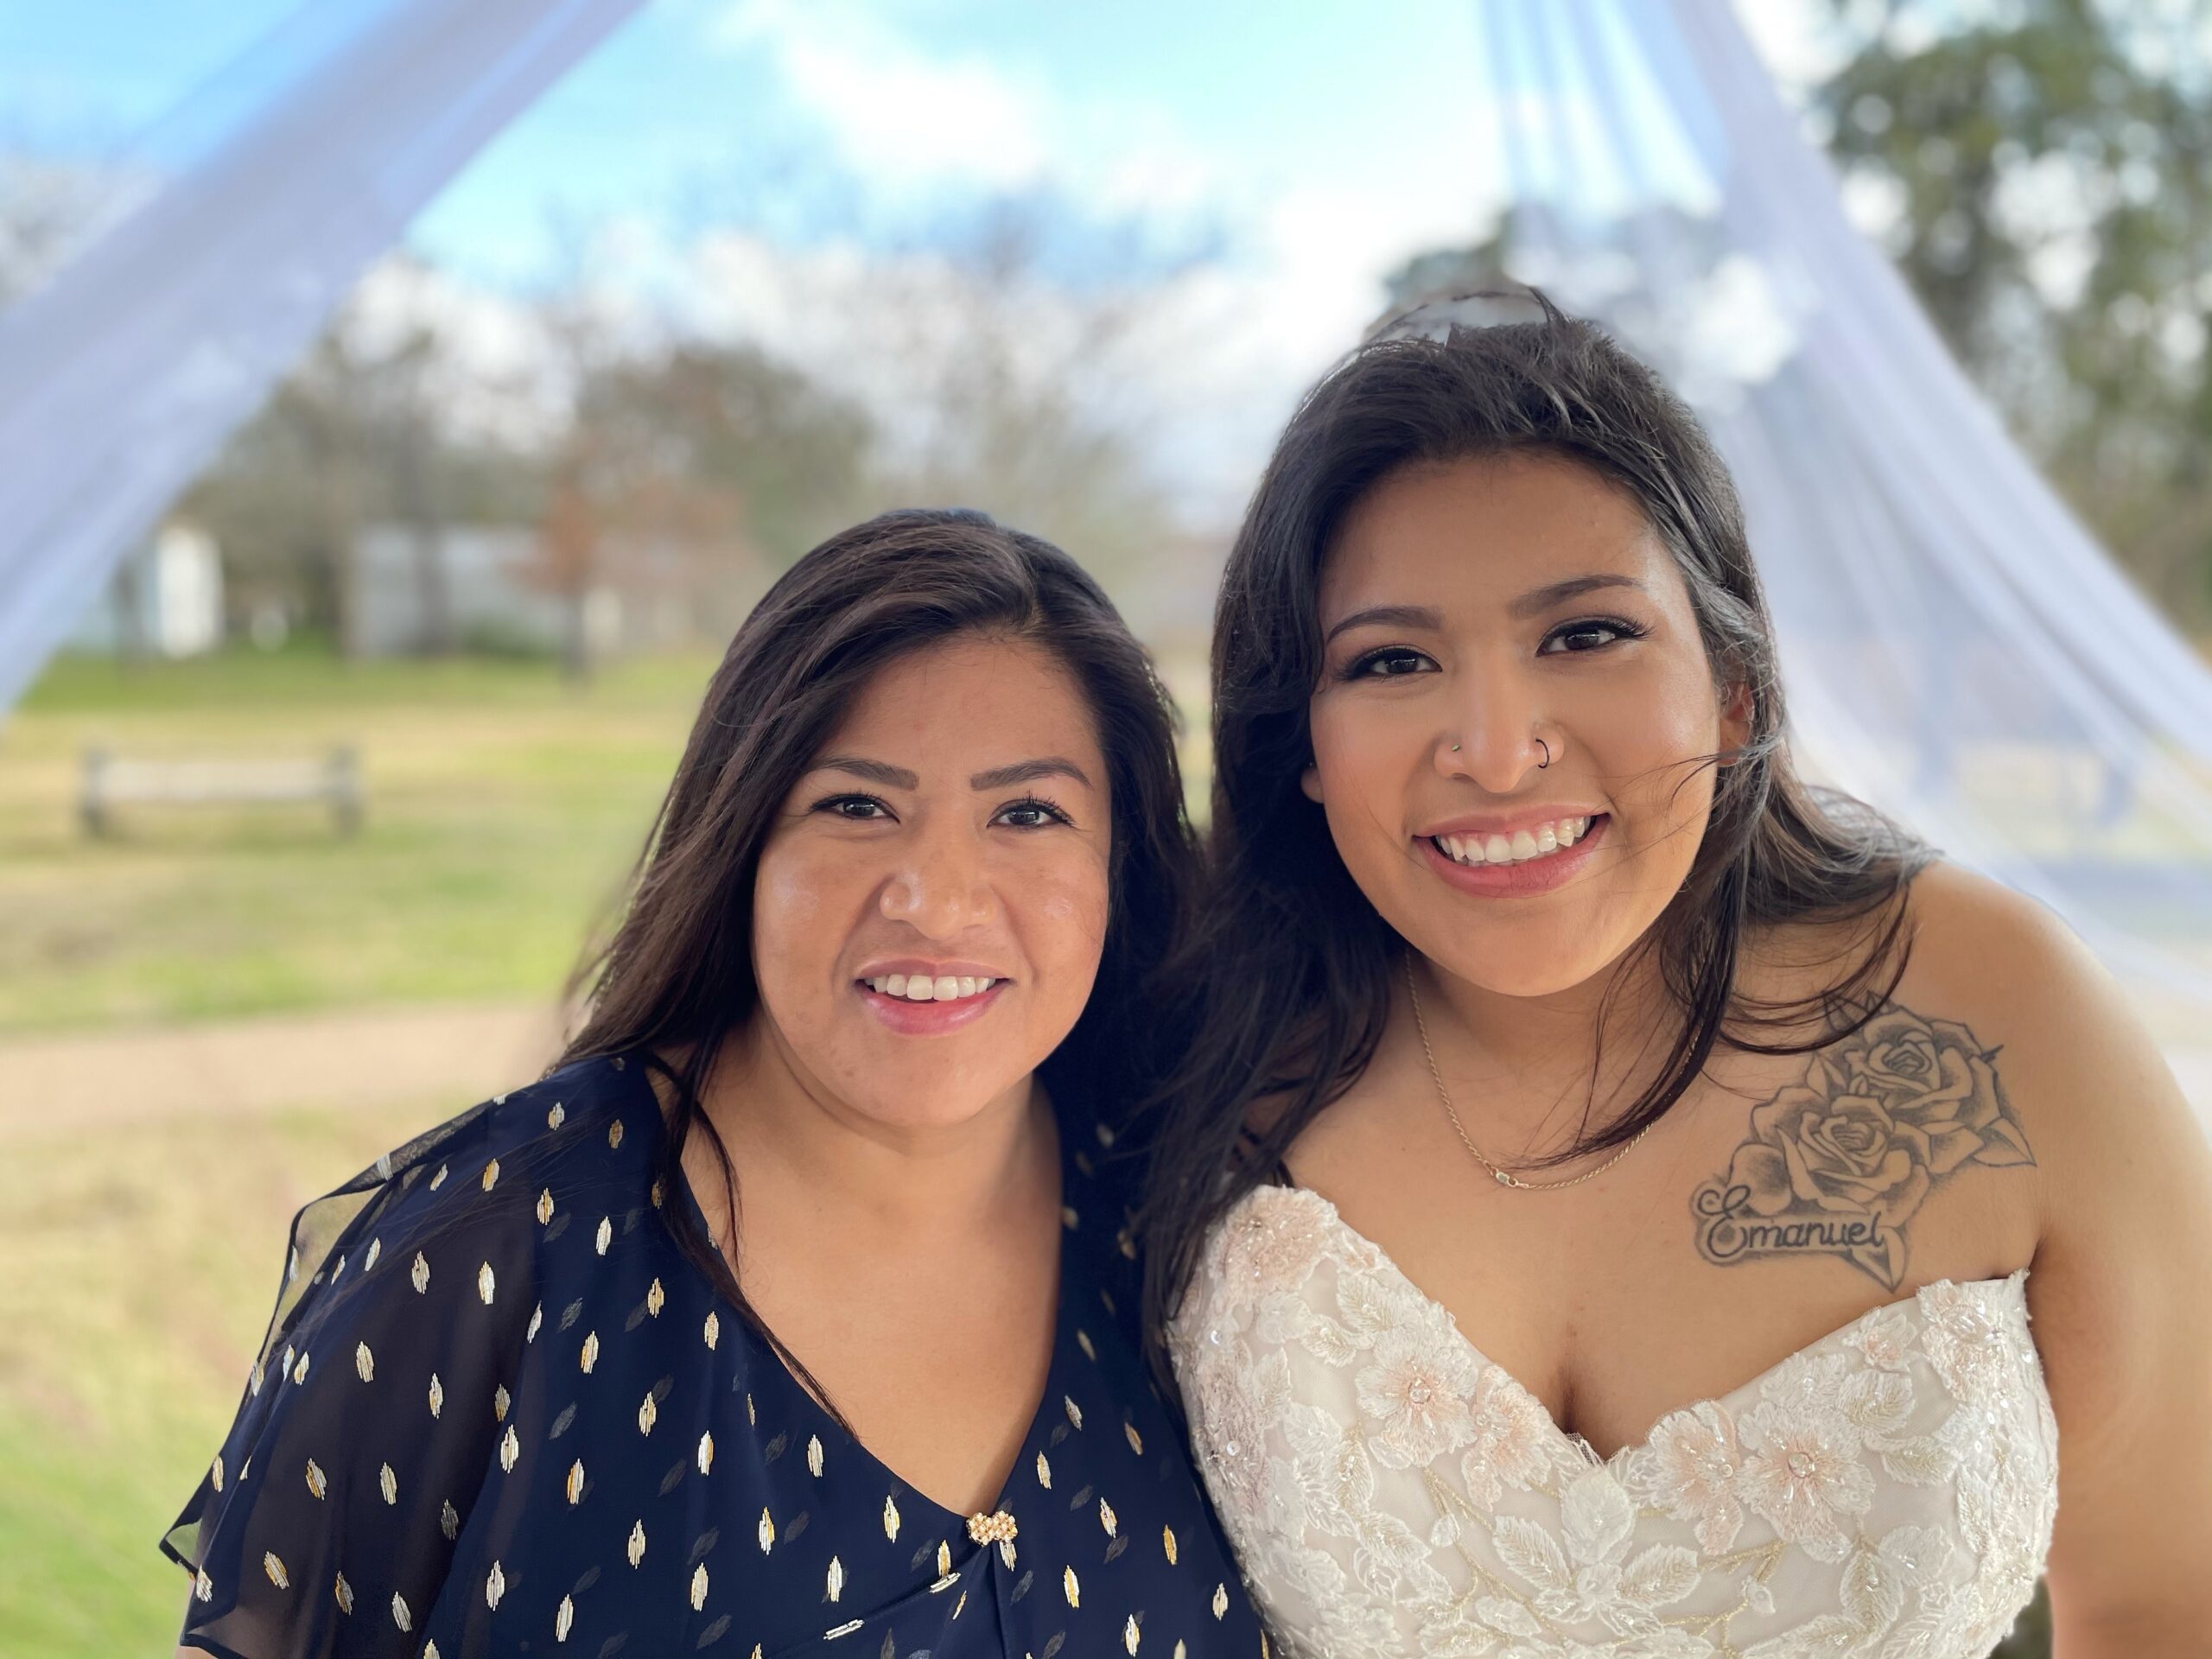 Rosa Jimenez and her daughter Brenda on her wedding day. (Image: Vanessa Potkin/Innocence Project)